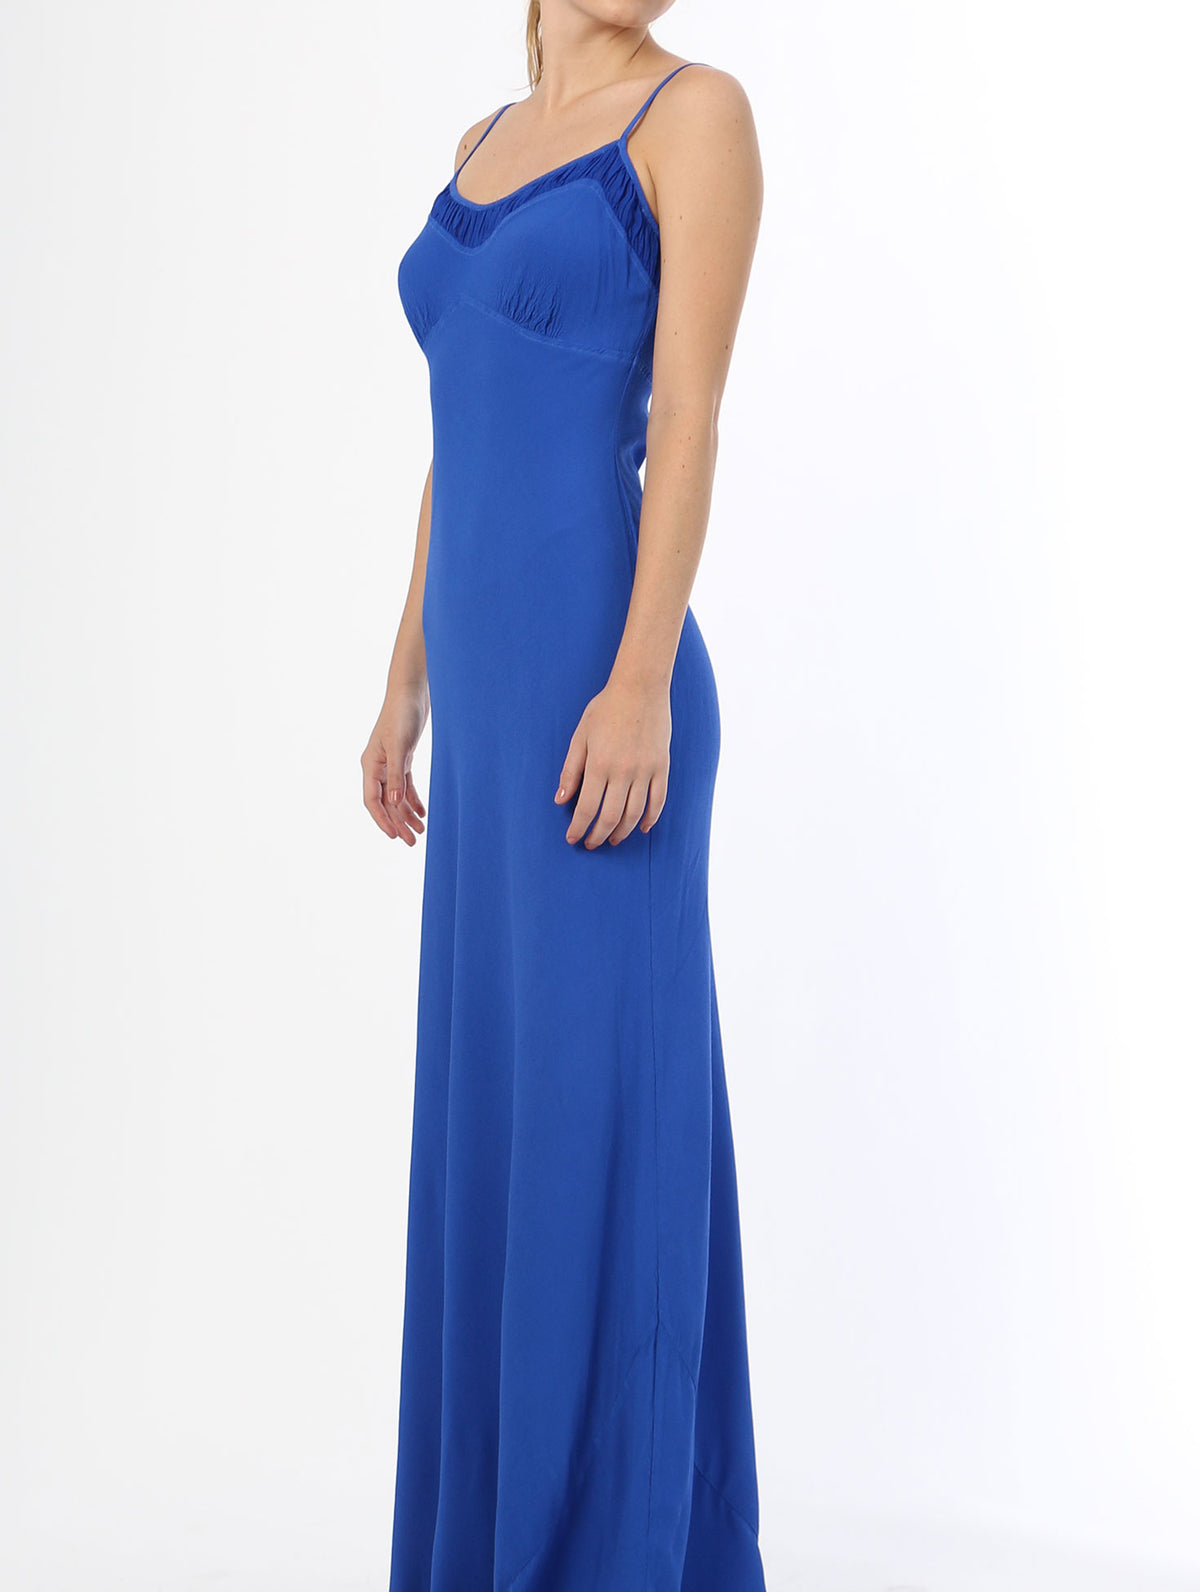 Leona Tank Maxi Dress - Cobalt Blue